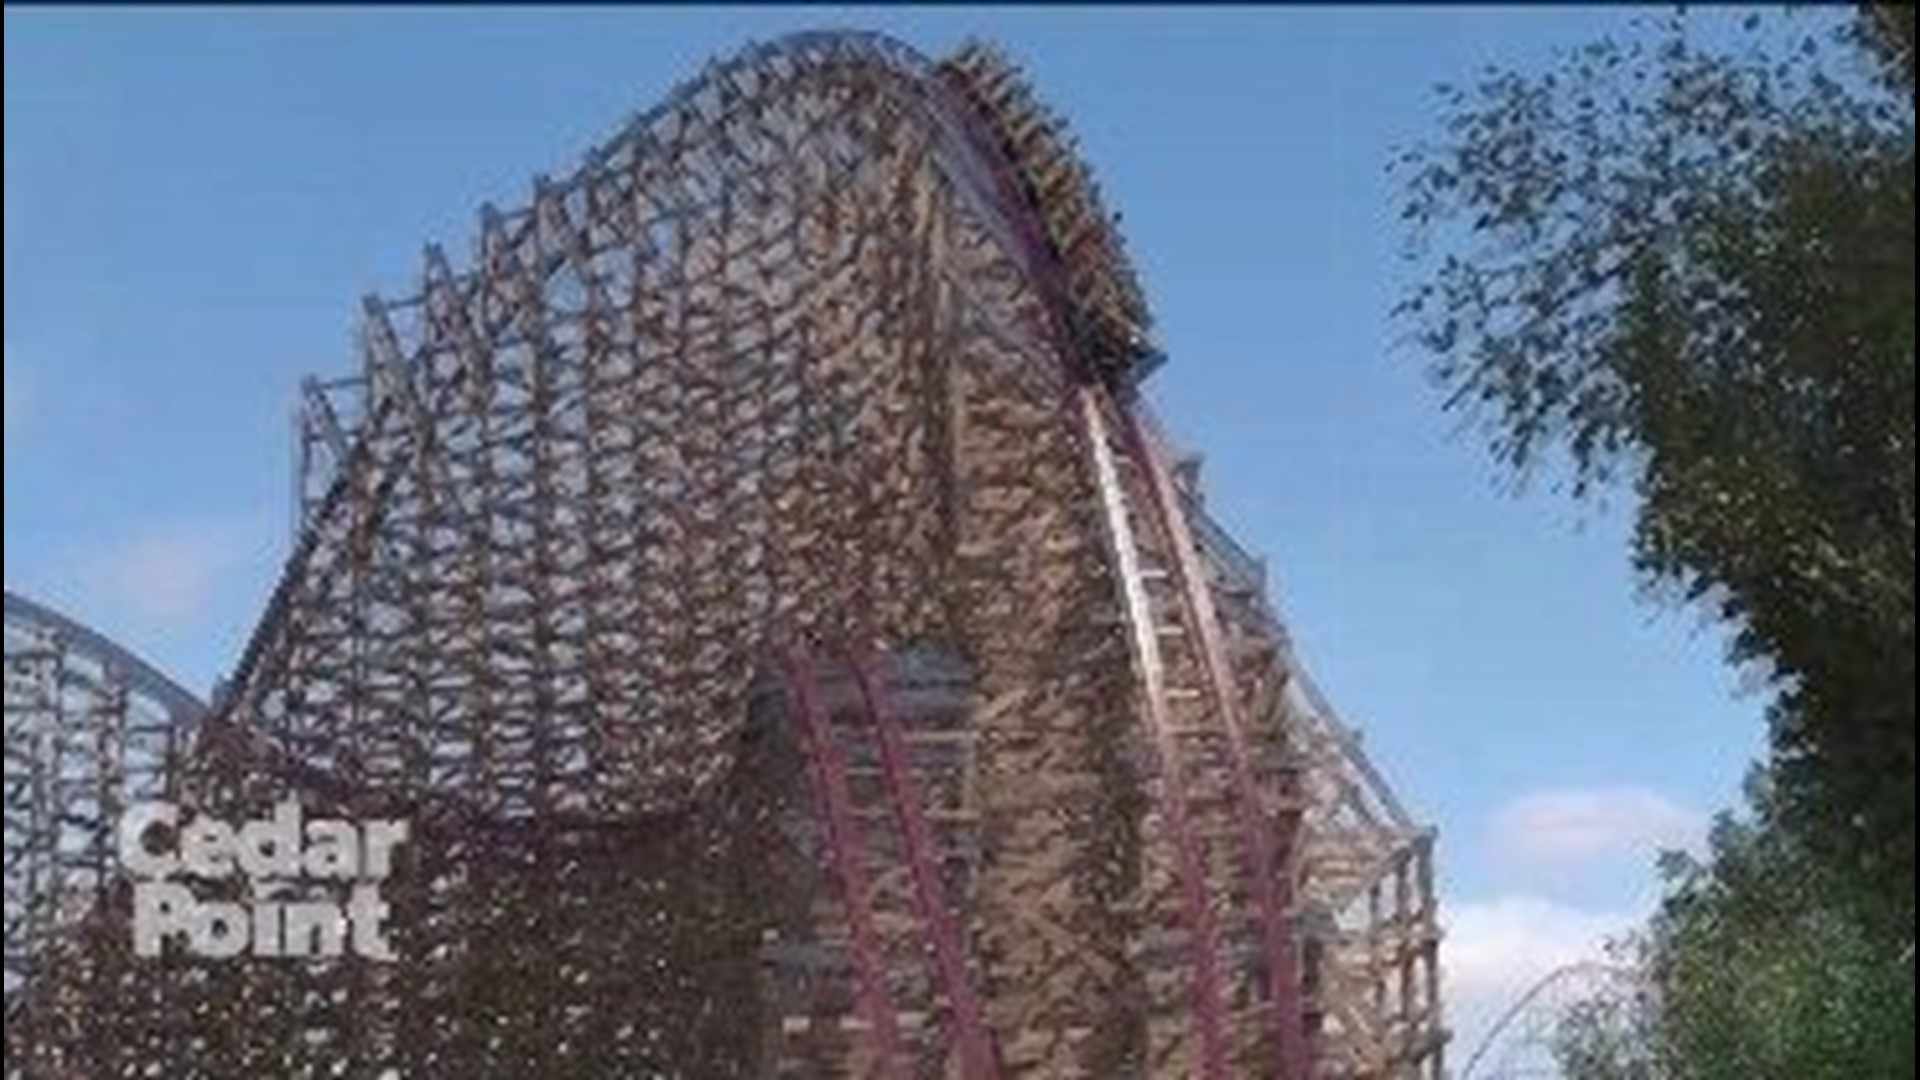 Cedar Point unveils 'Steel Vengence' - The world's FIRST hyper-hybrid roller coaster!